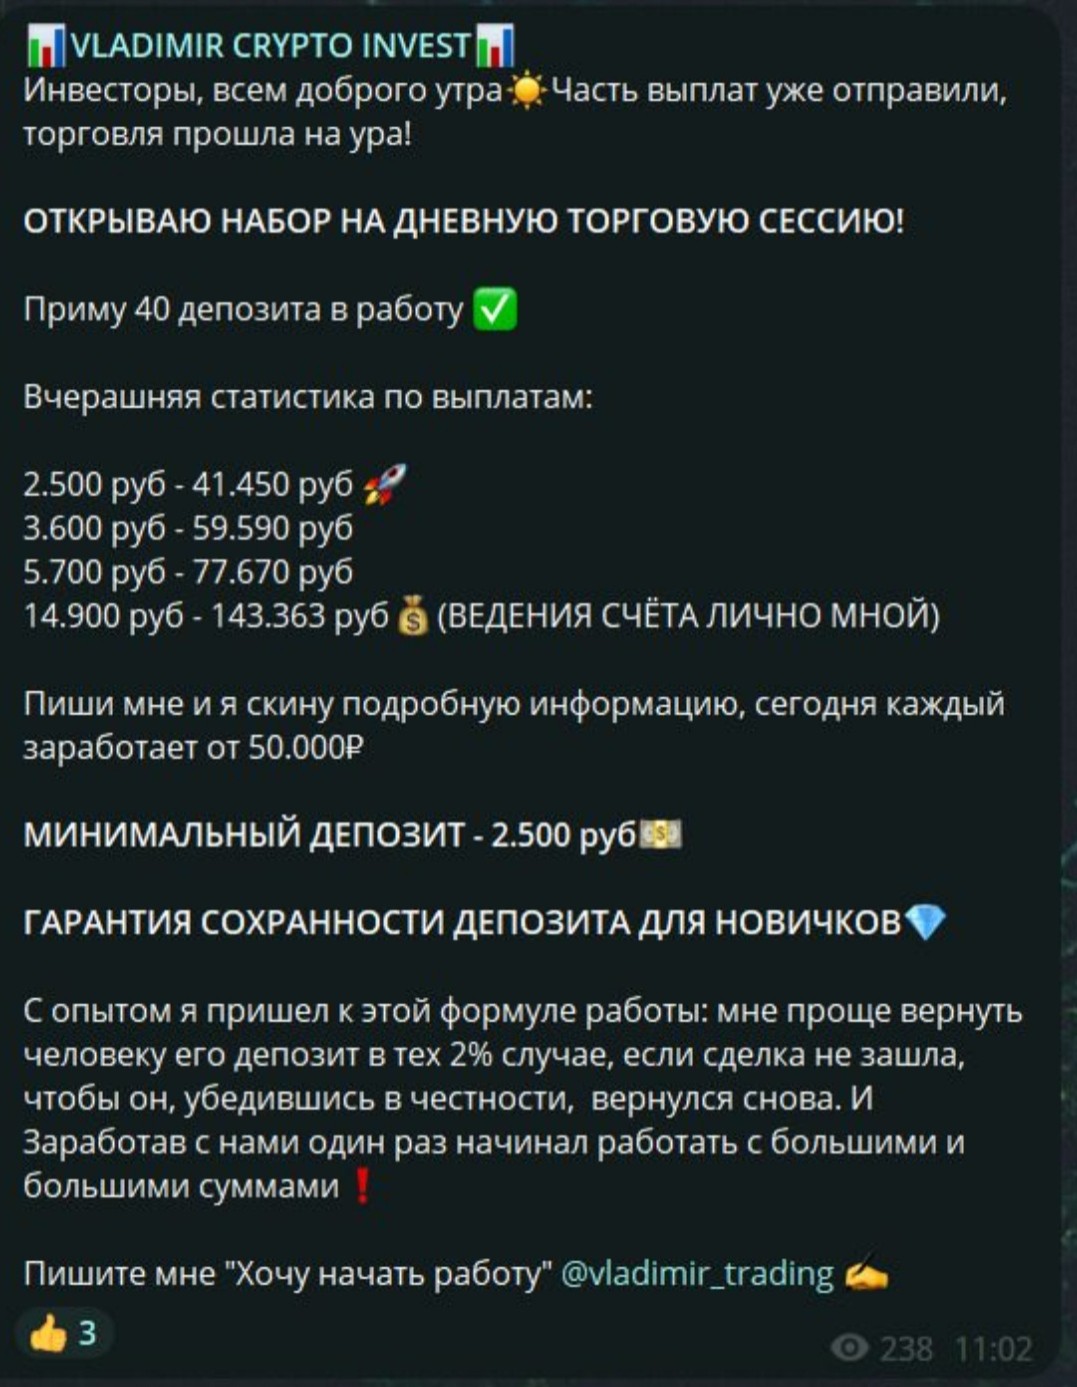 Vladimir Crypto Invest телеграм